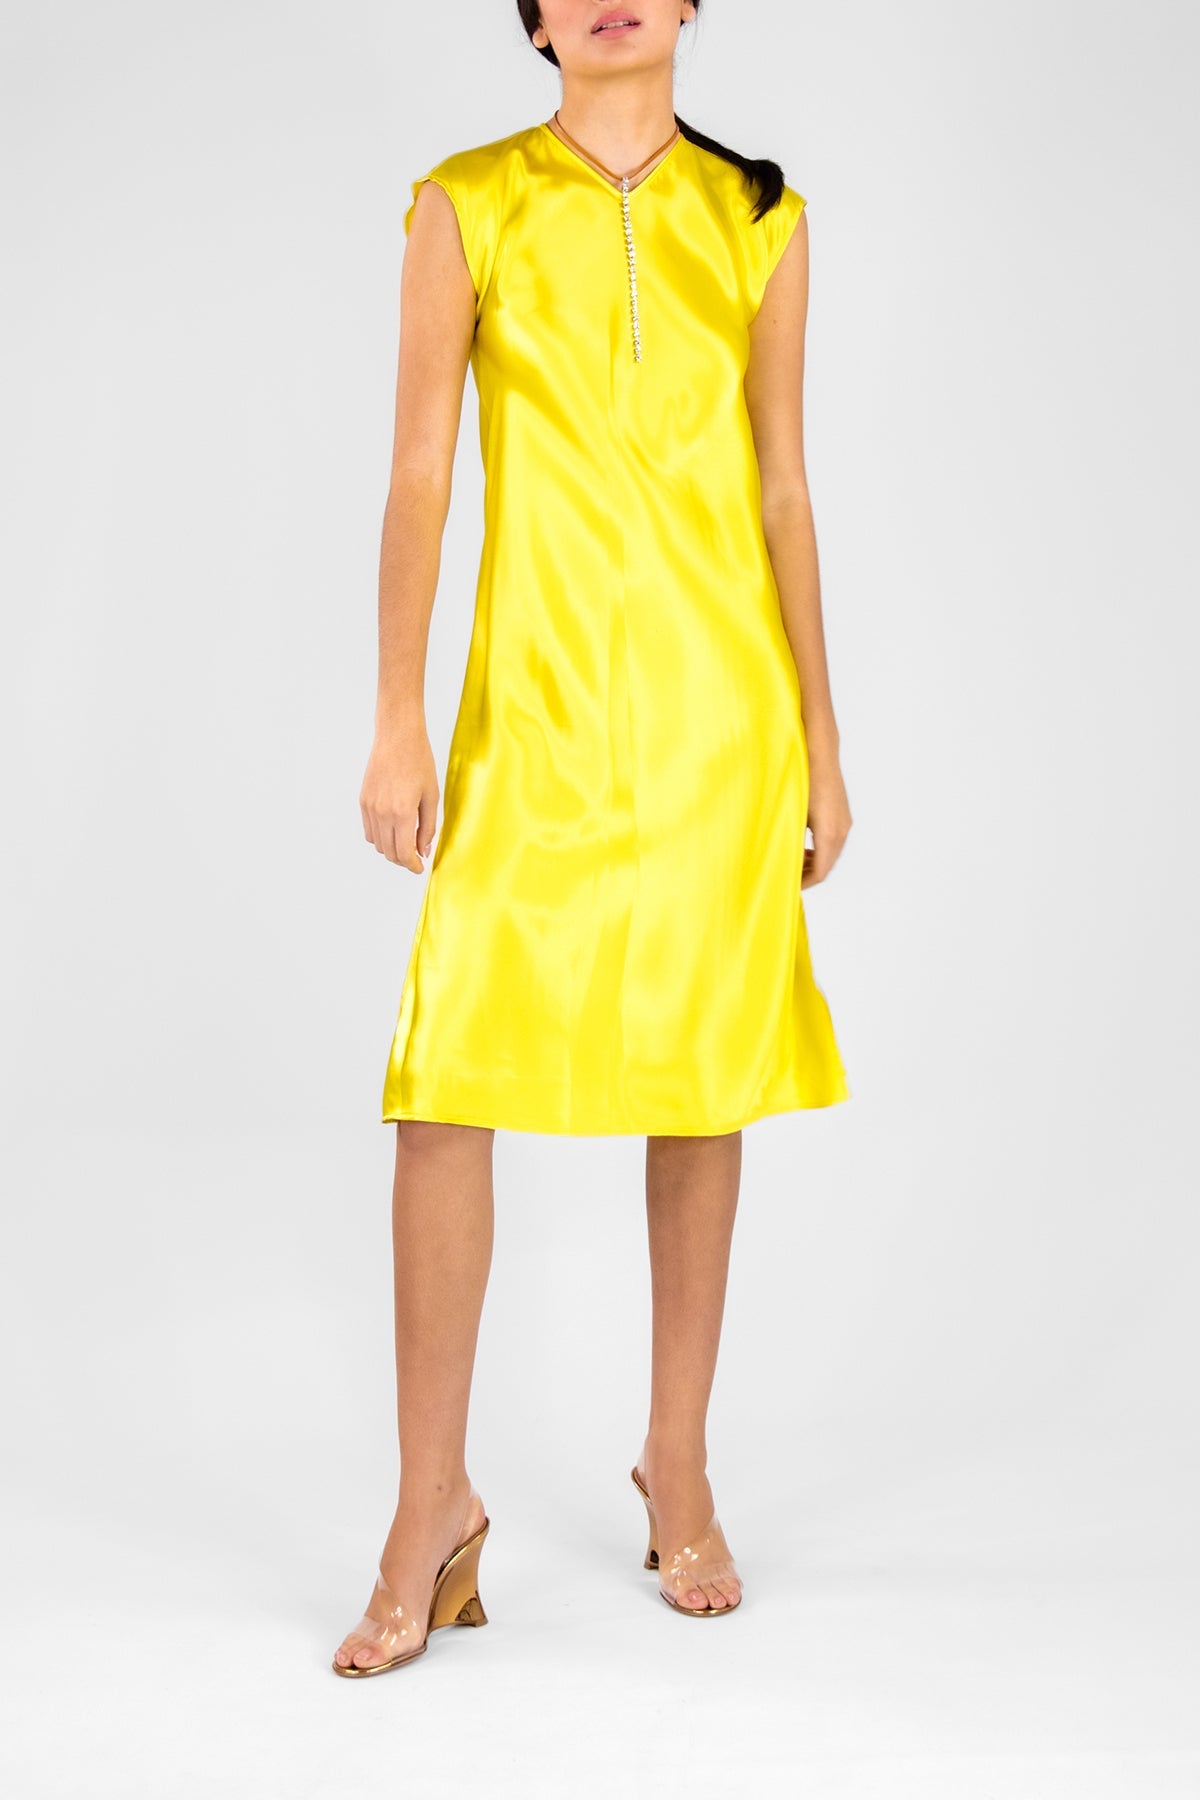 Shining Satin Sheath Dress in Lollypop - shop-olivia.com